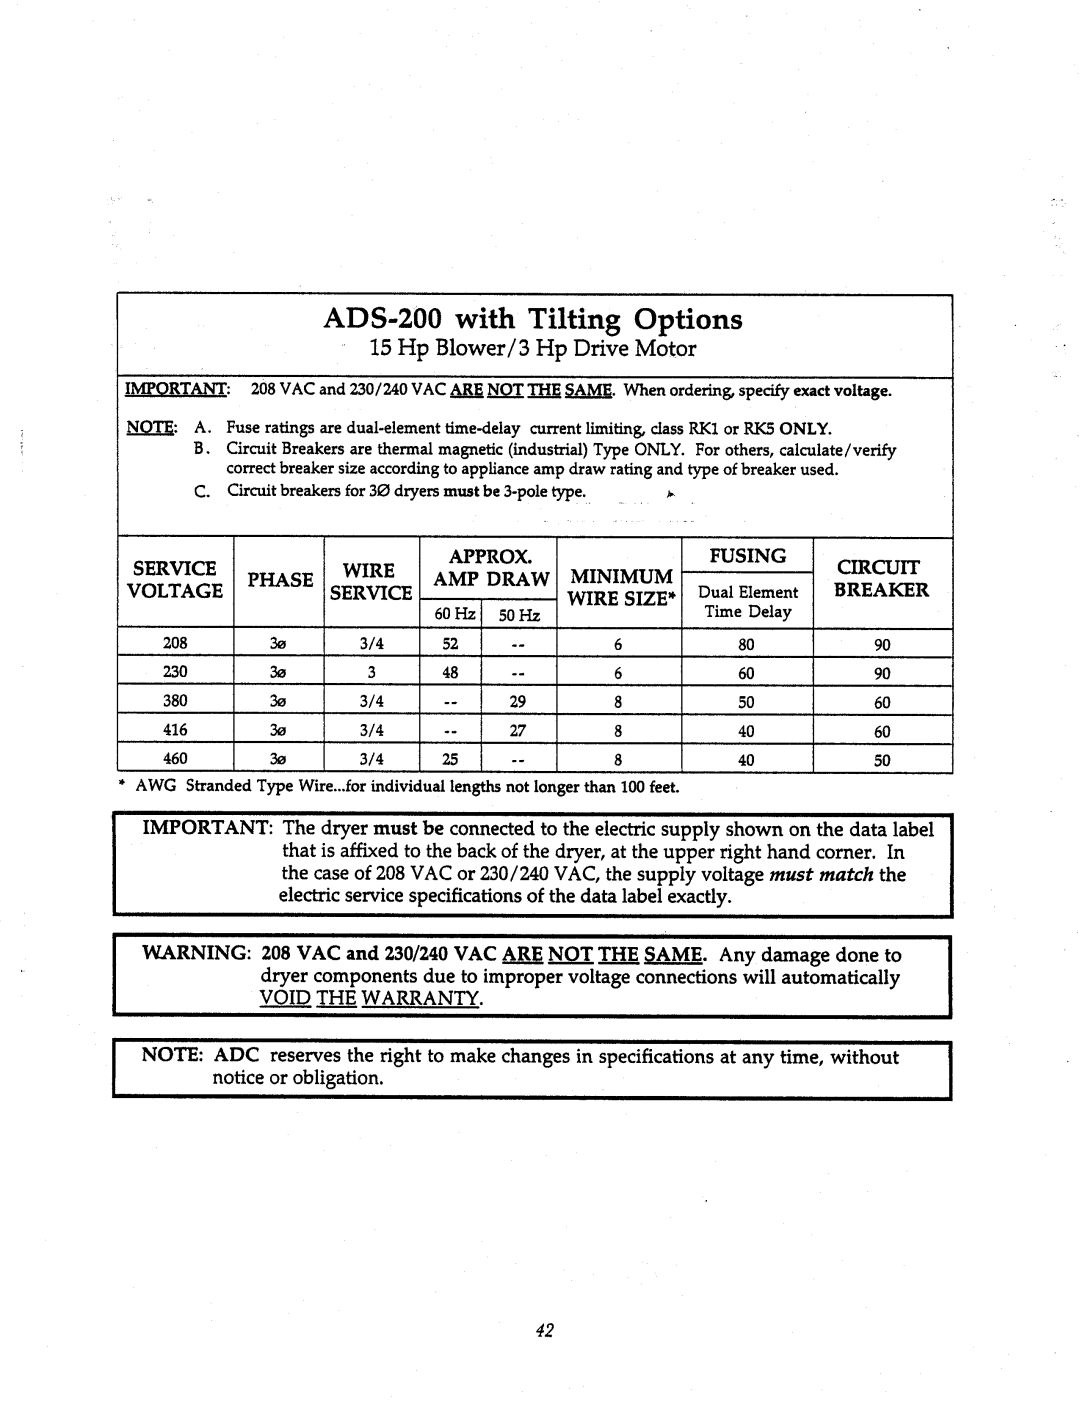 American Dryer Corp AD-200 Tilting manual 